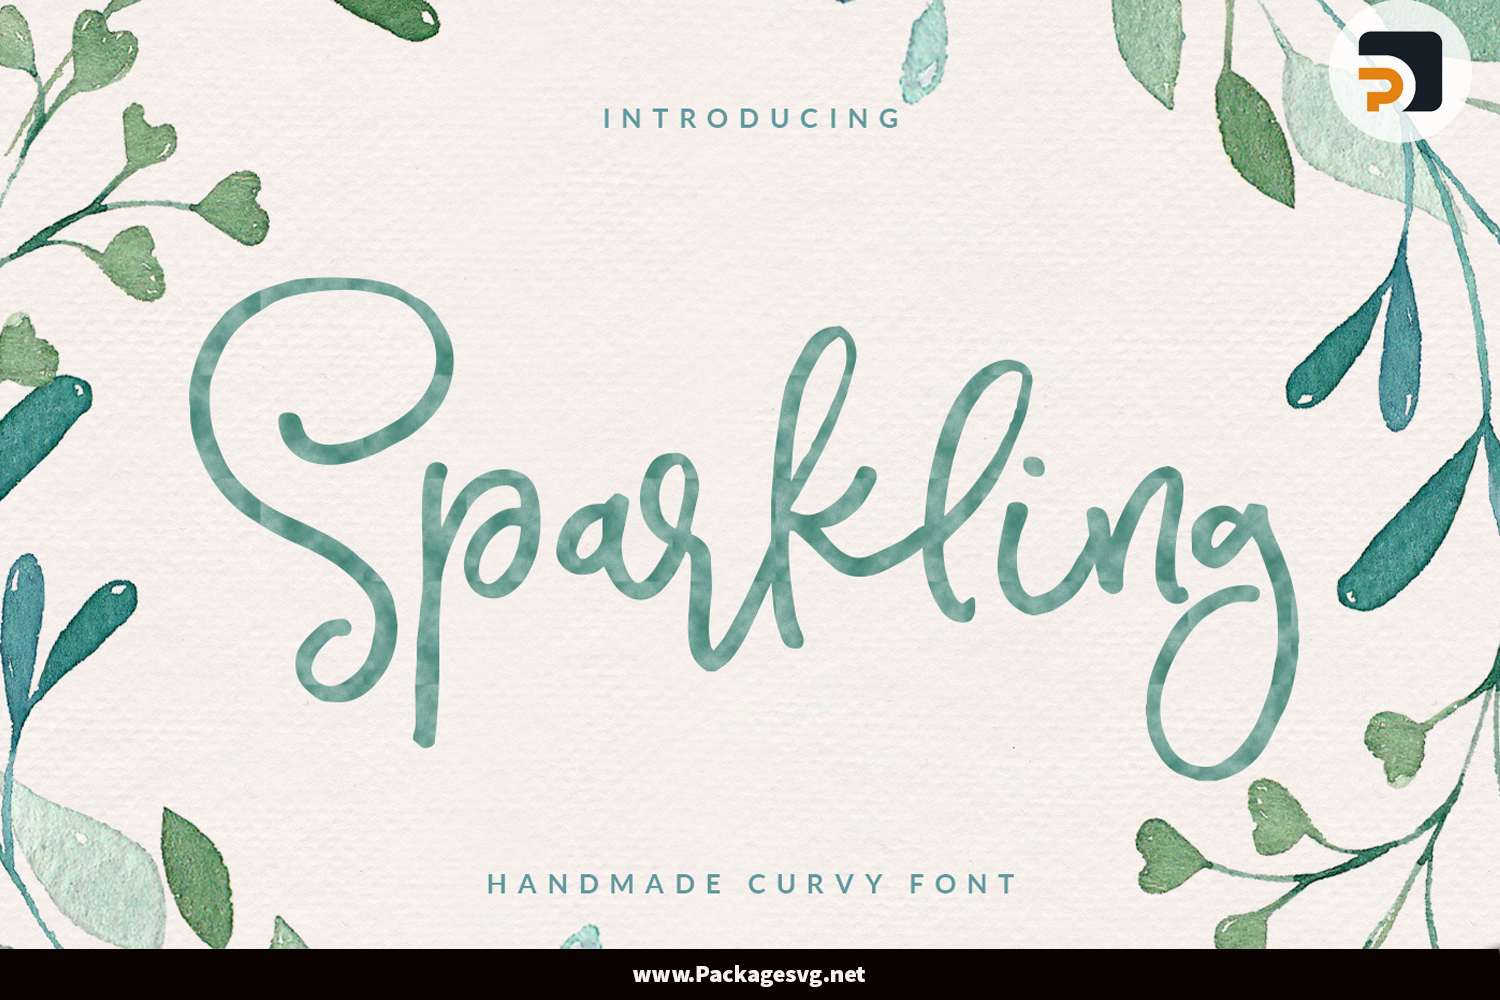 Sparkling Handmade Curvy Font